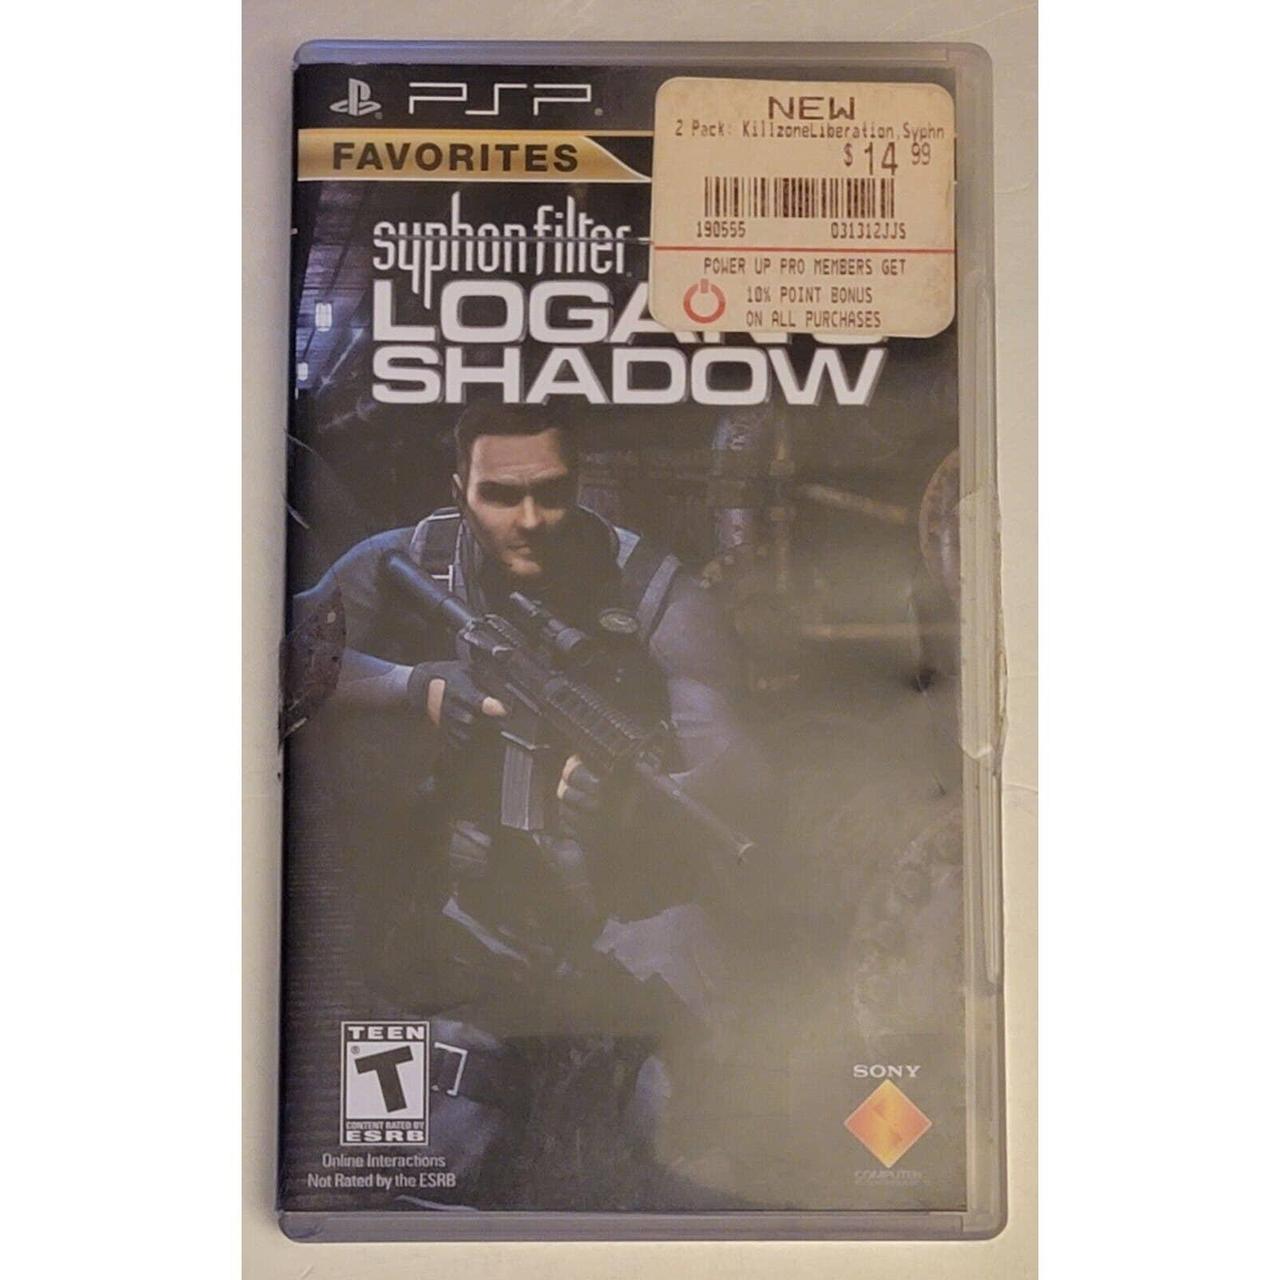 Syphon Filter Logan's Shadow PSP